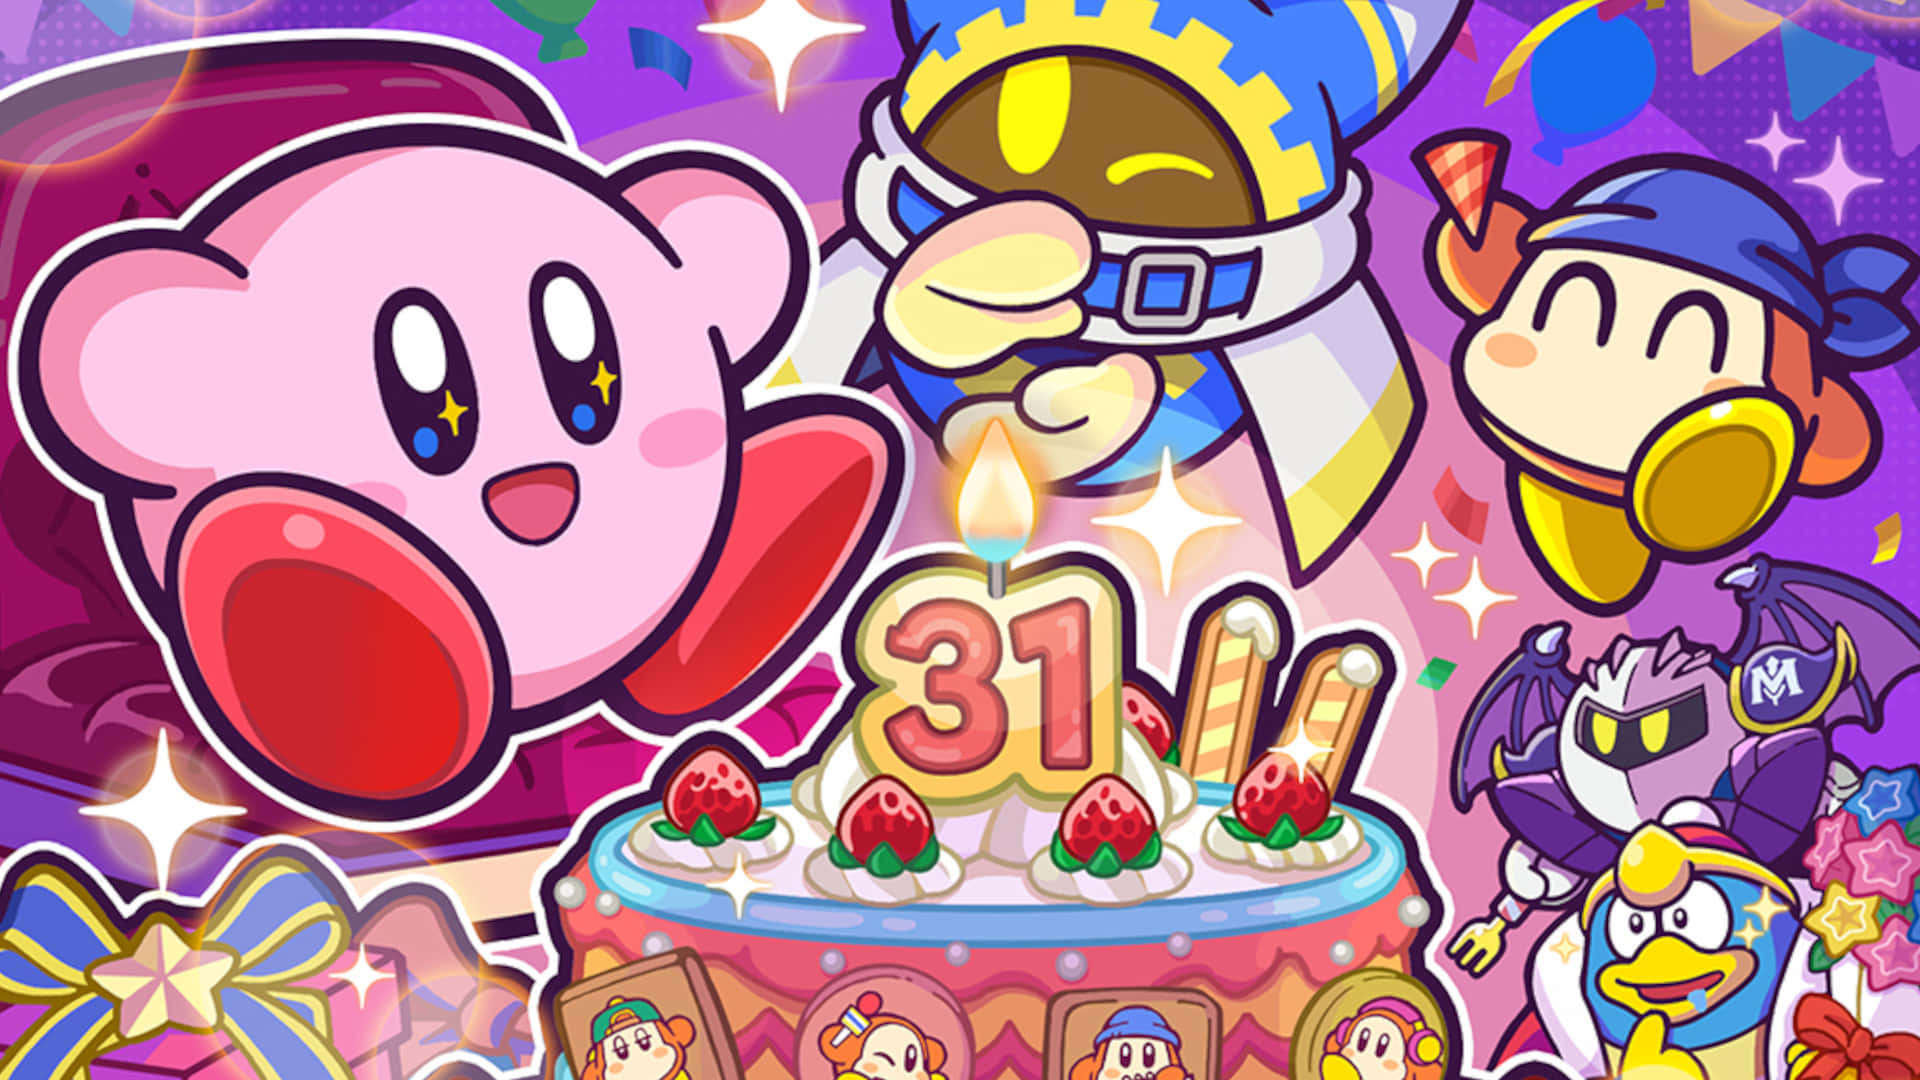 Kirby31st Anniversary Celebration Wallpaper